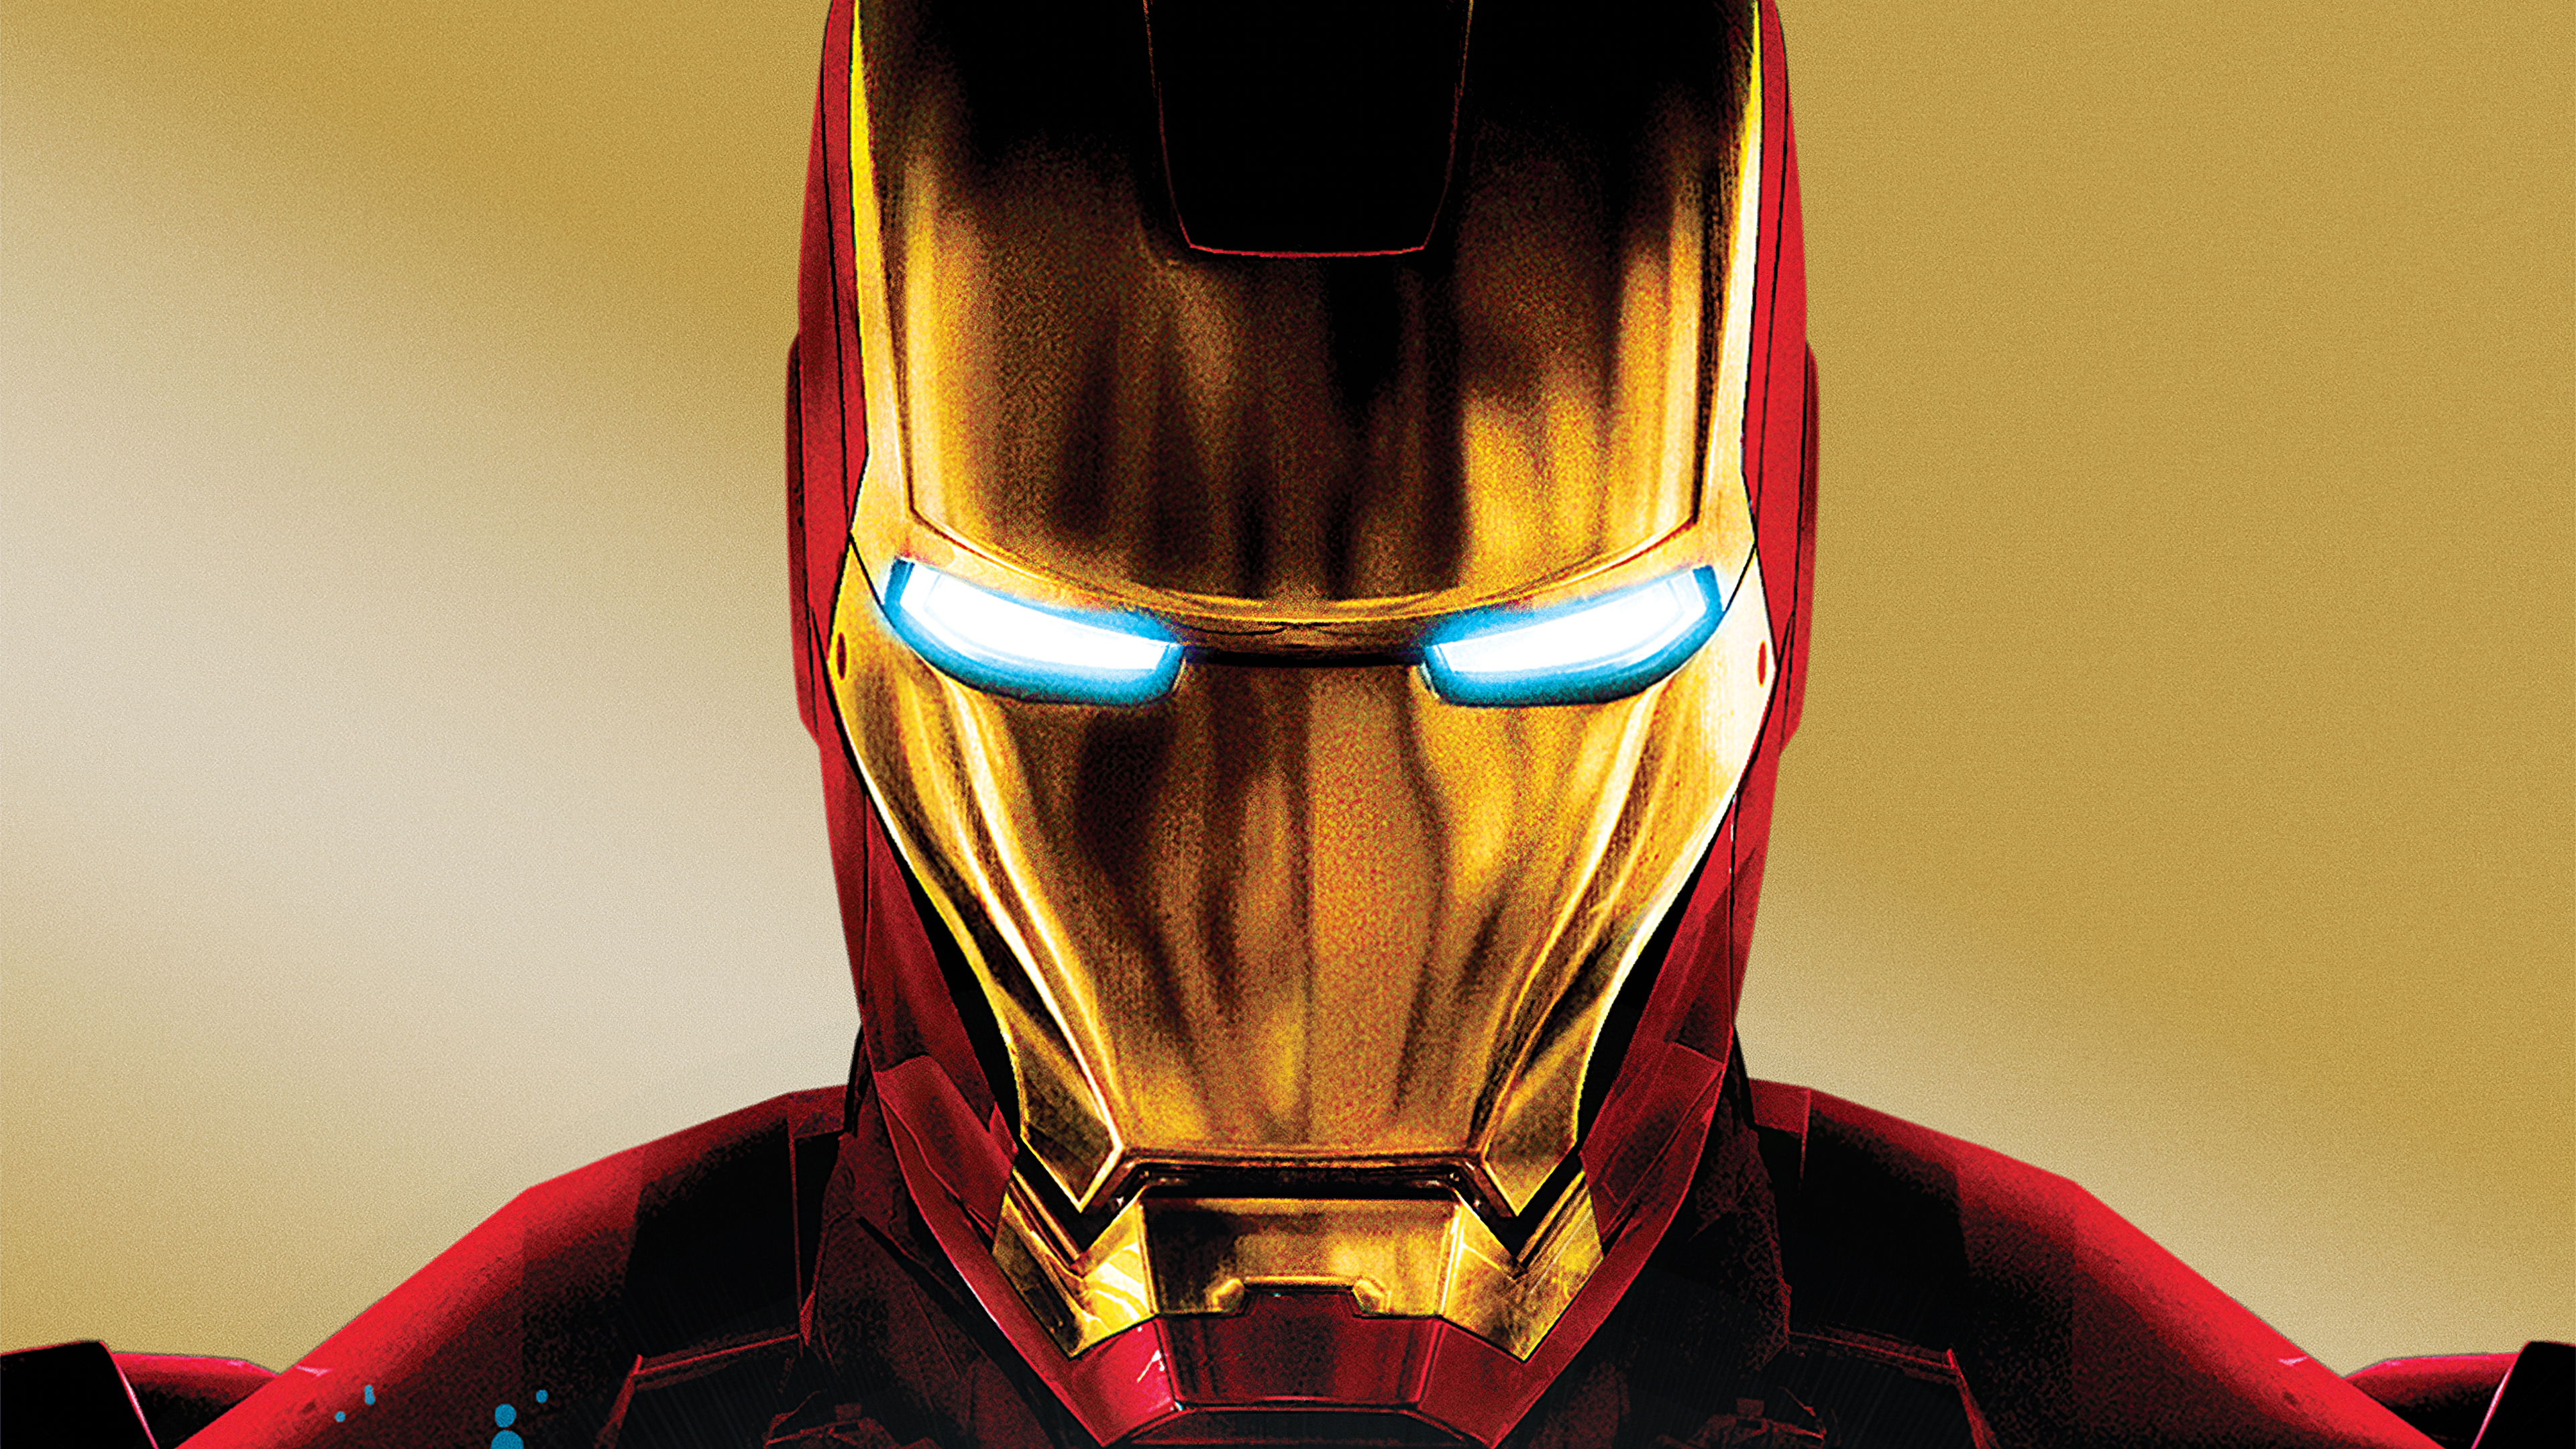 Iron Man Mask 4K Wallpaper Free Iron Man Mask 4K Background